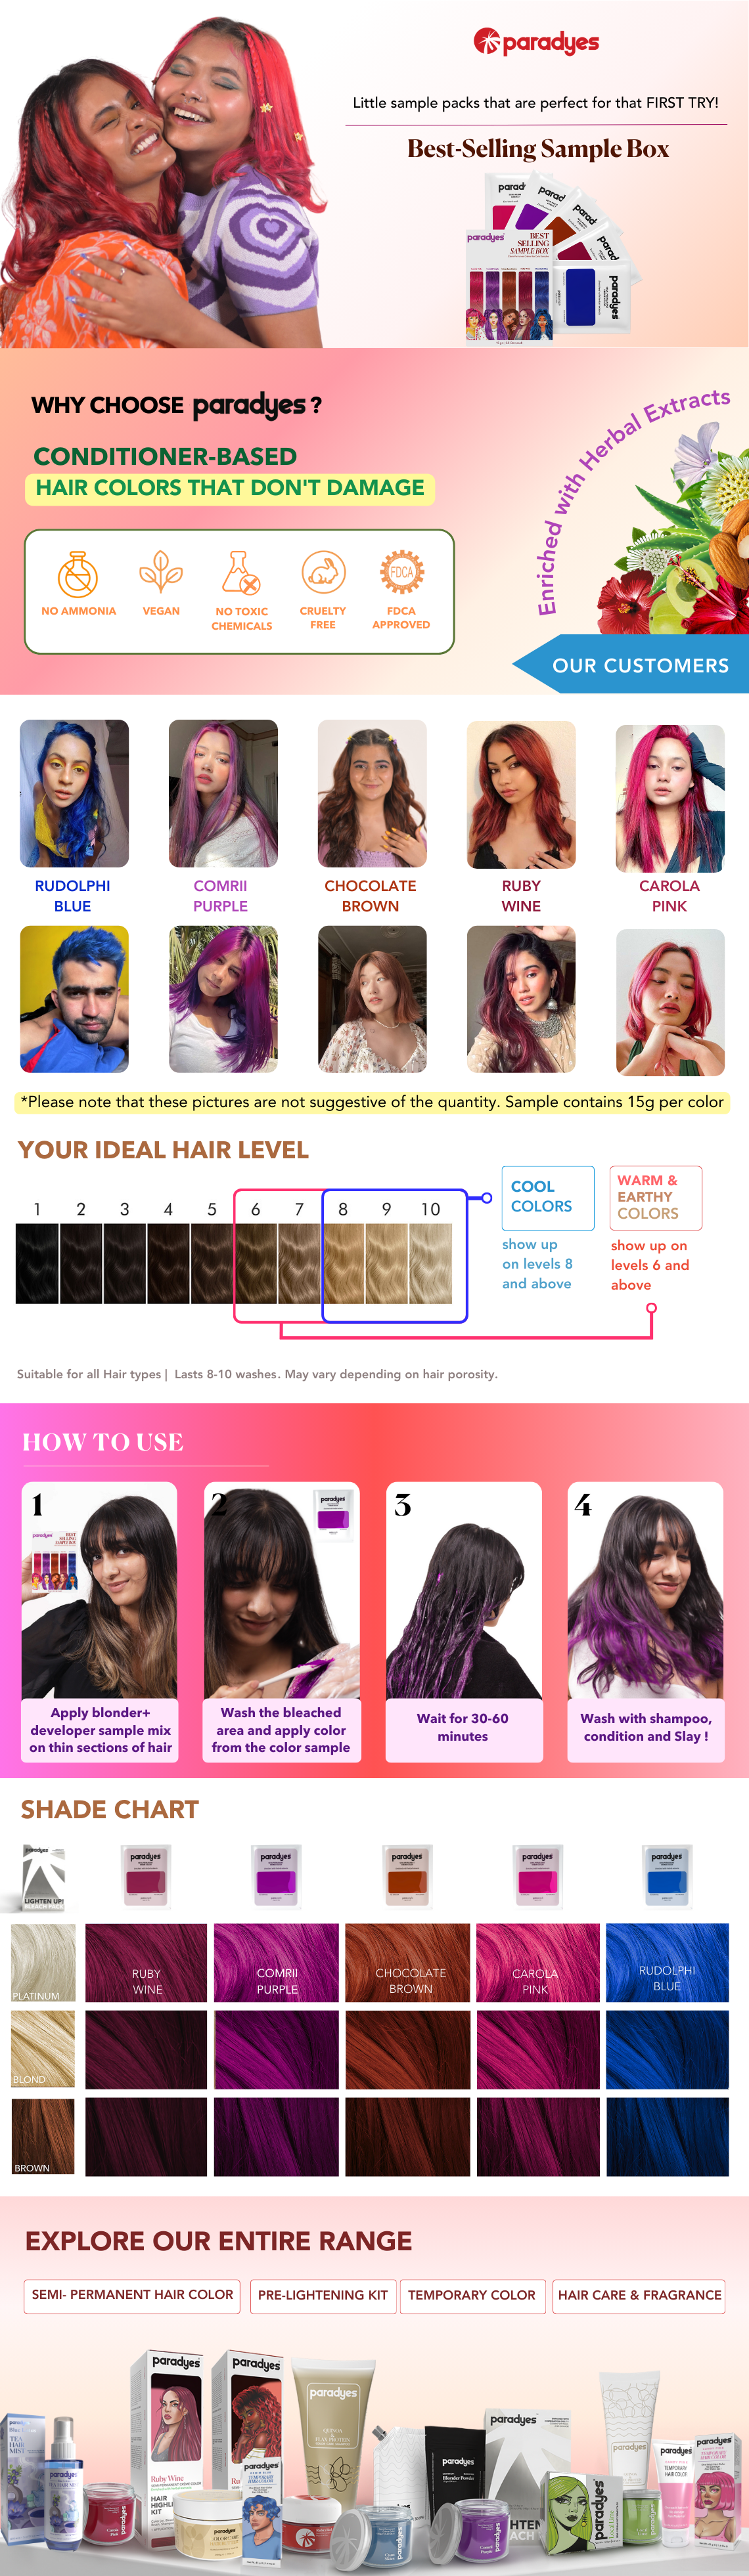 Lighten Up! Bleach Pack + Cool Hair Color Sample Box